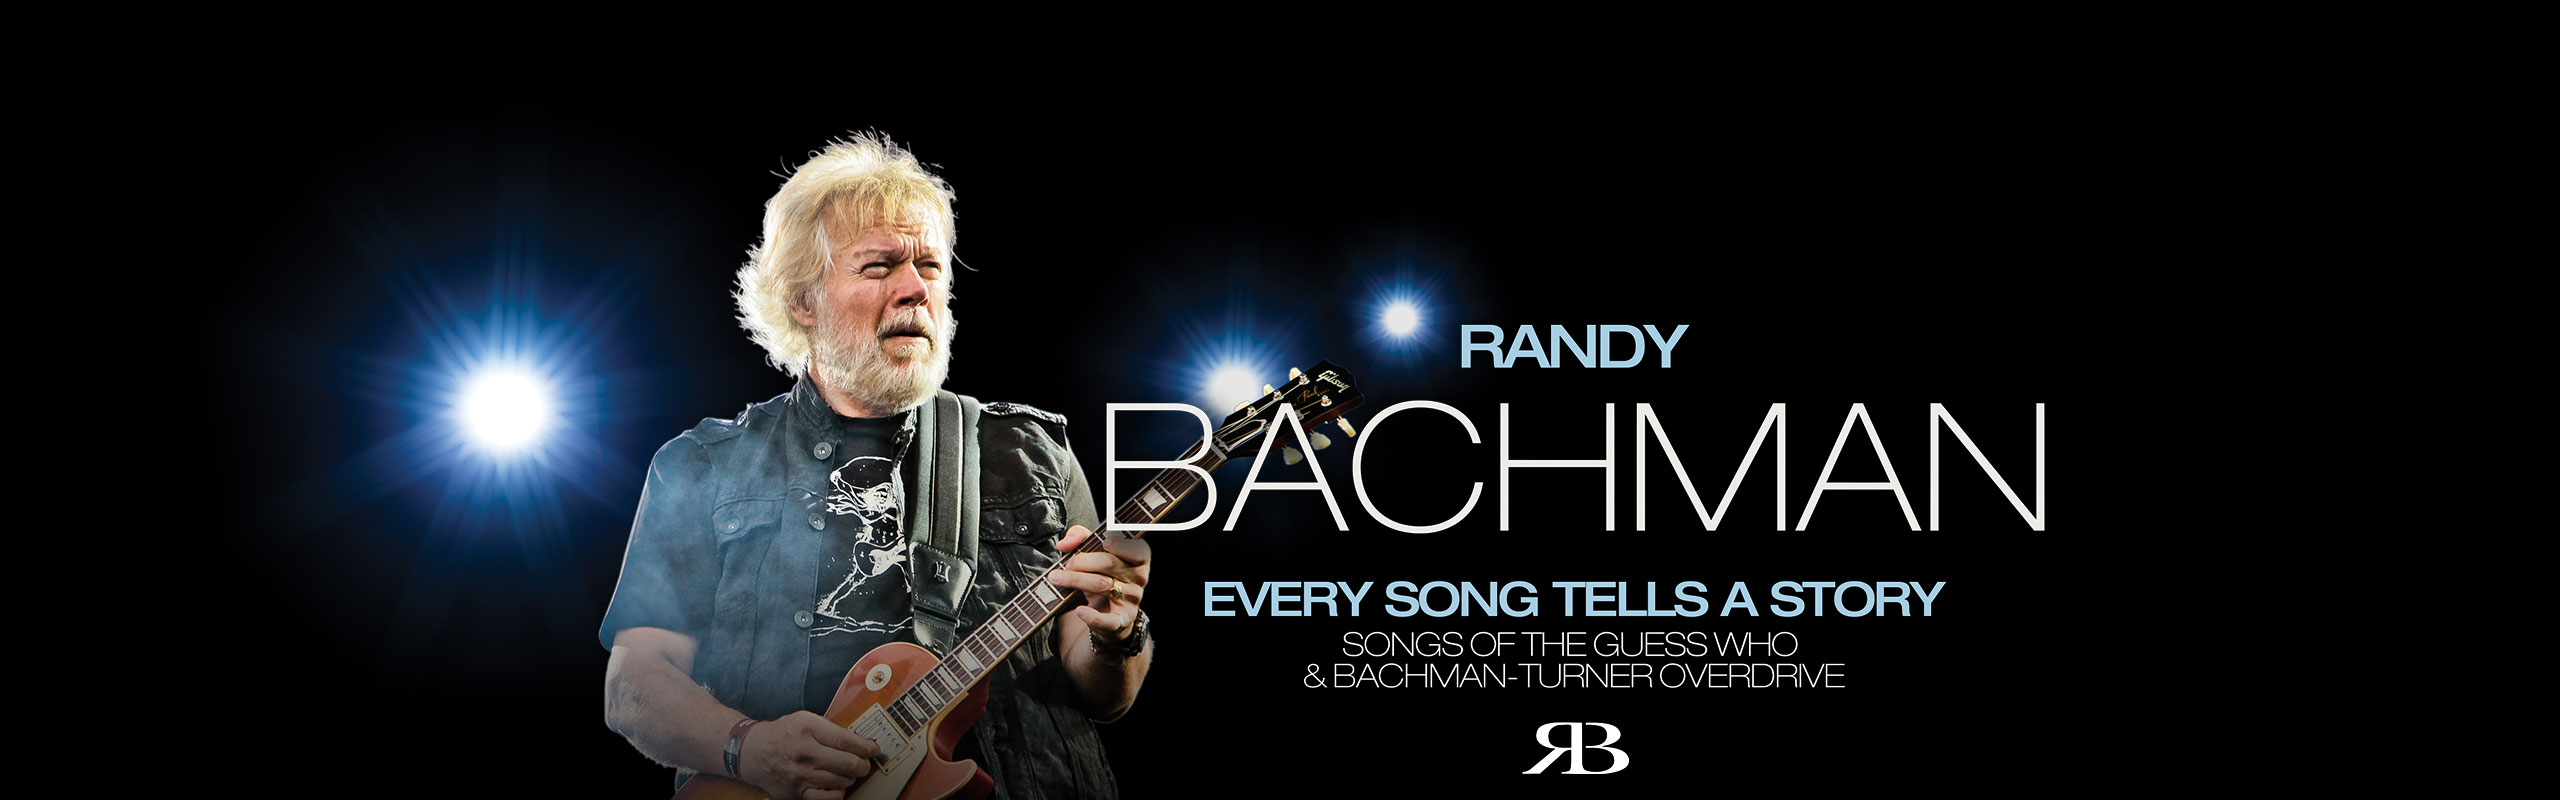 Randy Bachman Show - Performing Arts and Leadership